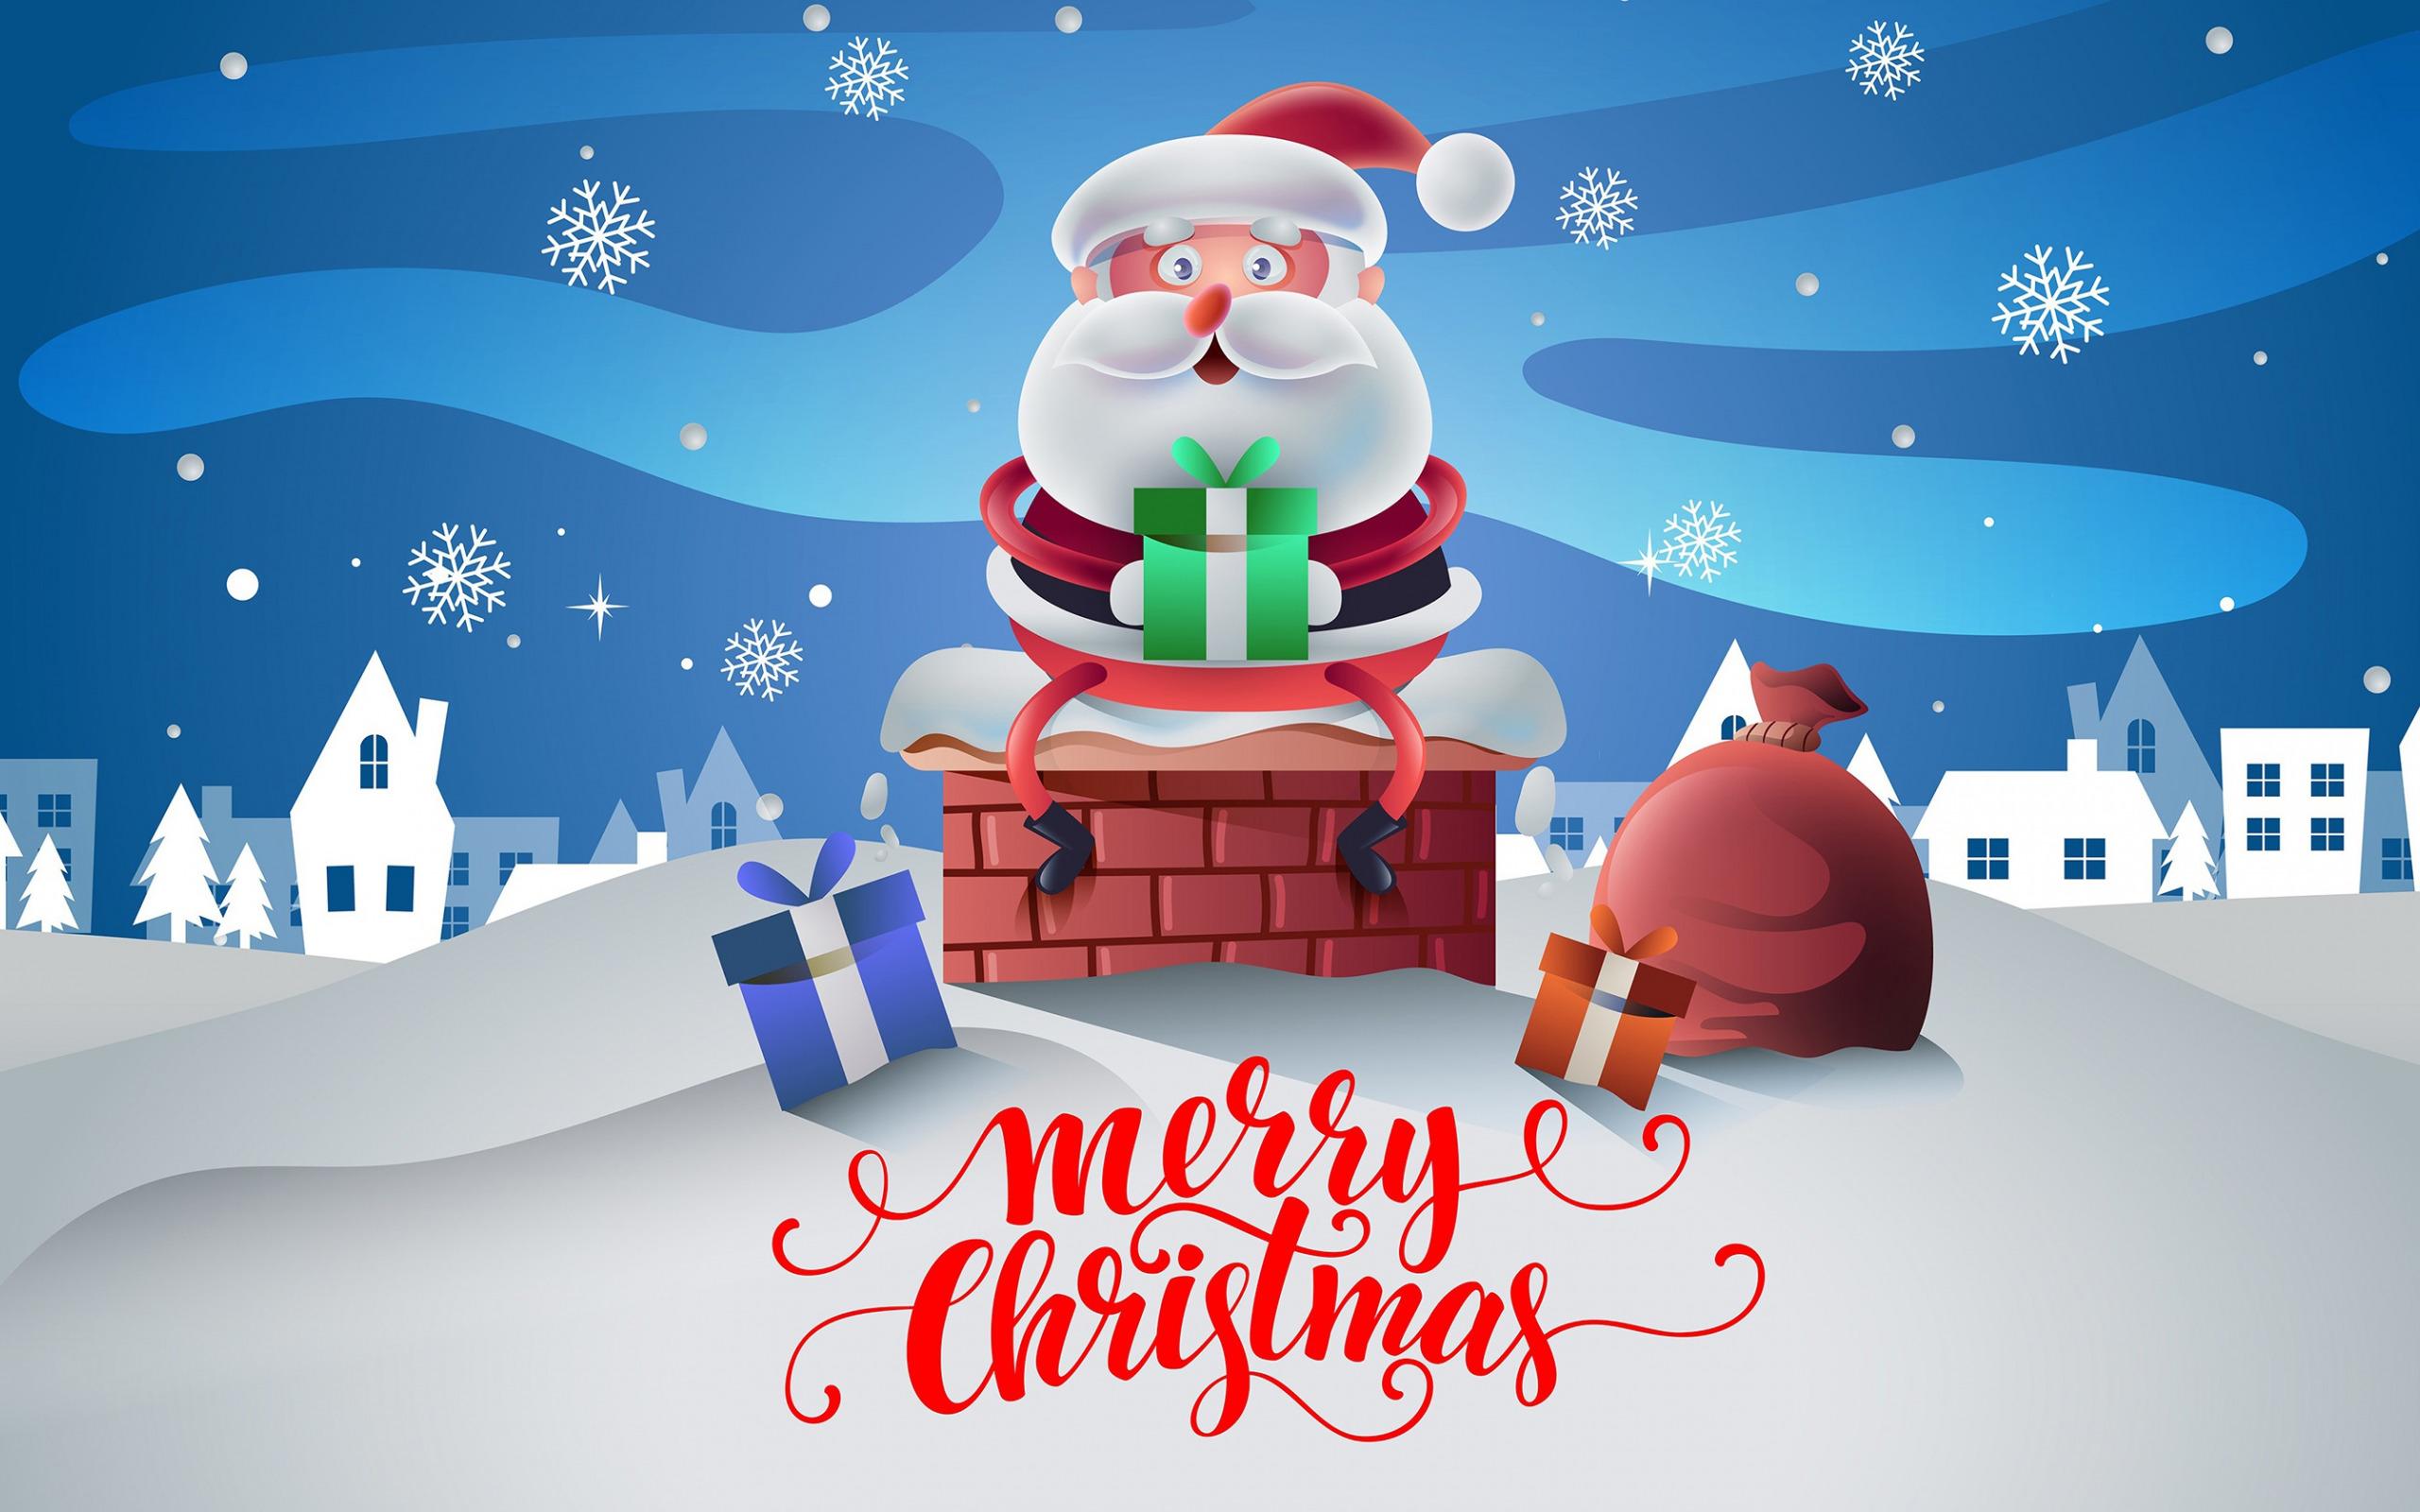 Download wallpaper Merry Christmas, 3D Santa Claus, roof